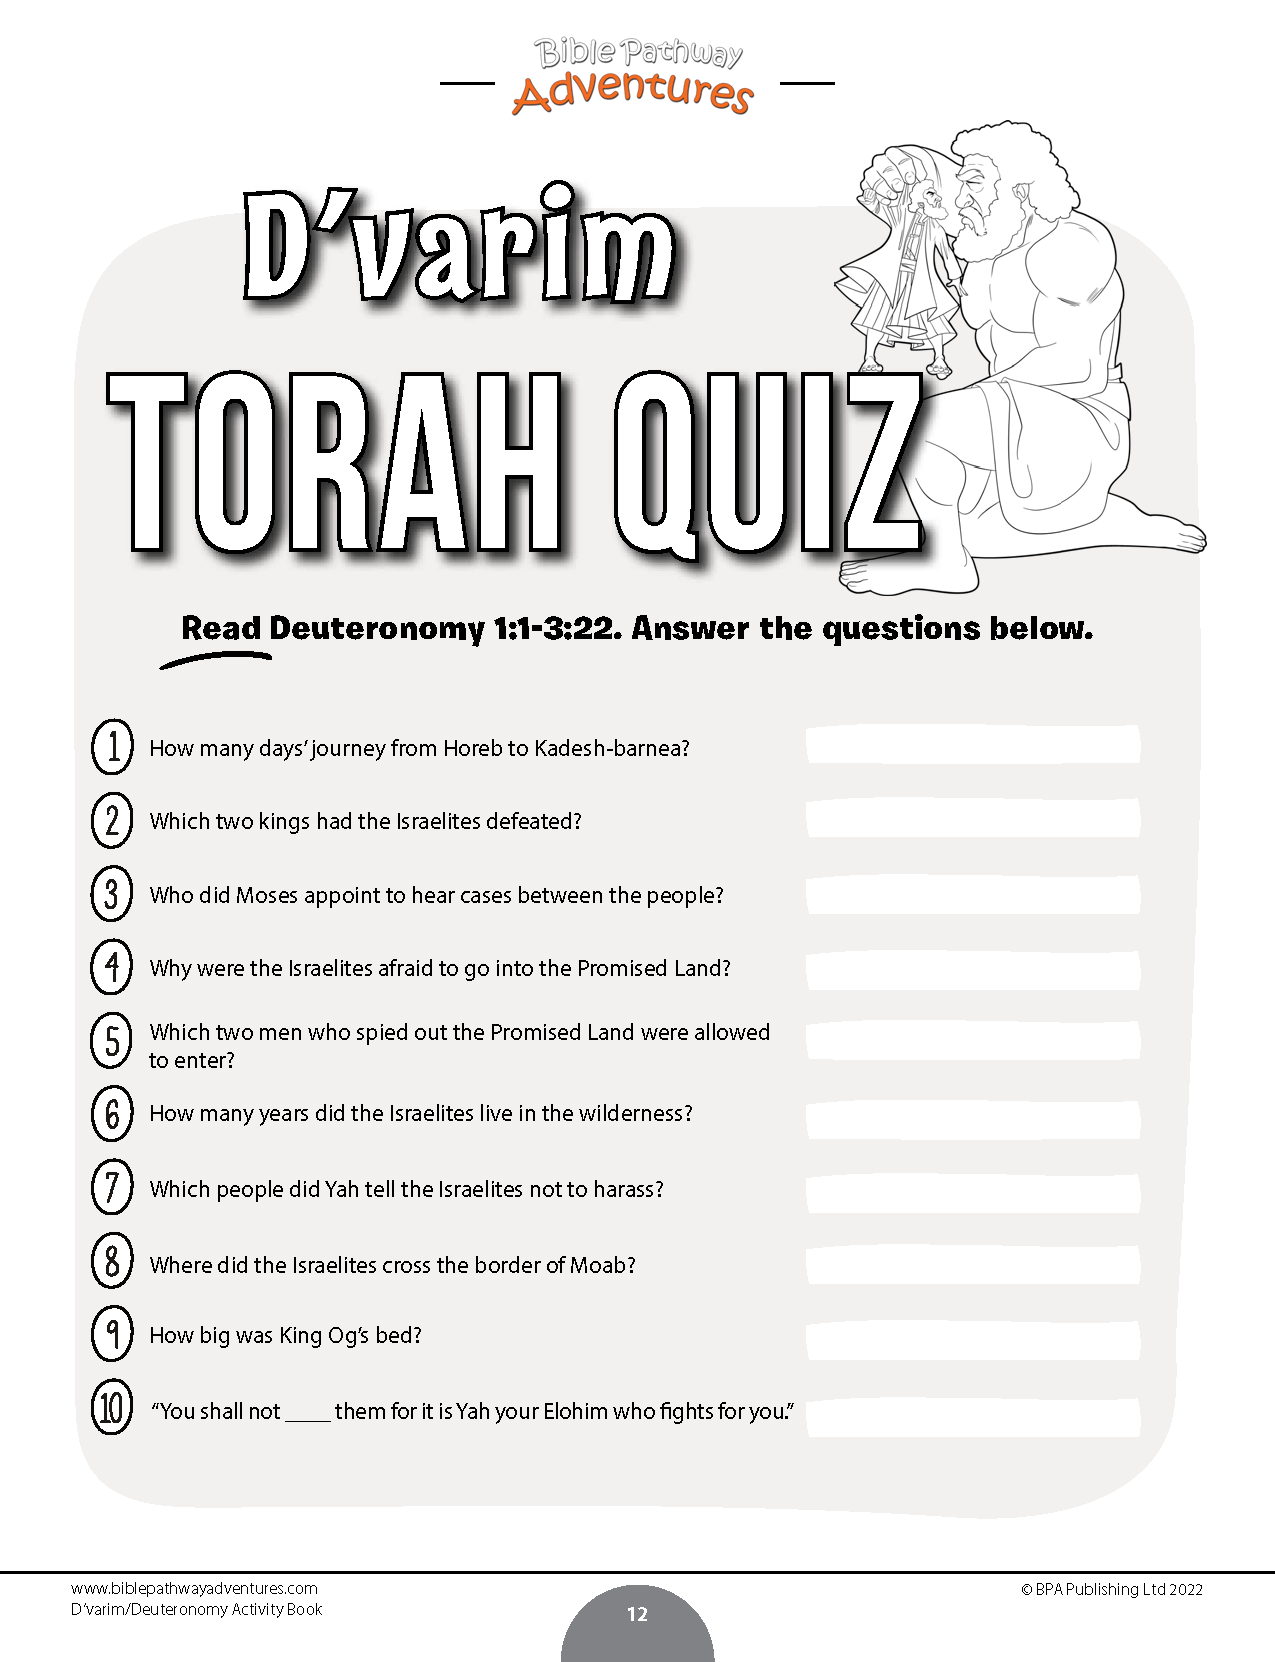 D’varim / Deuteronomy Torah Portion Activity Book